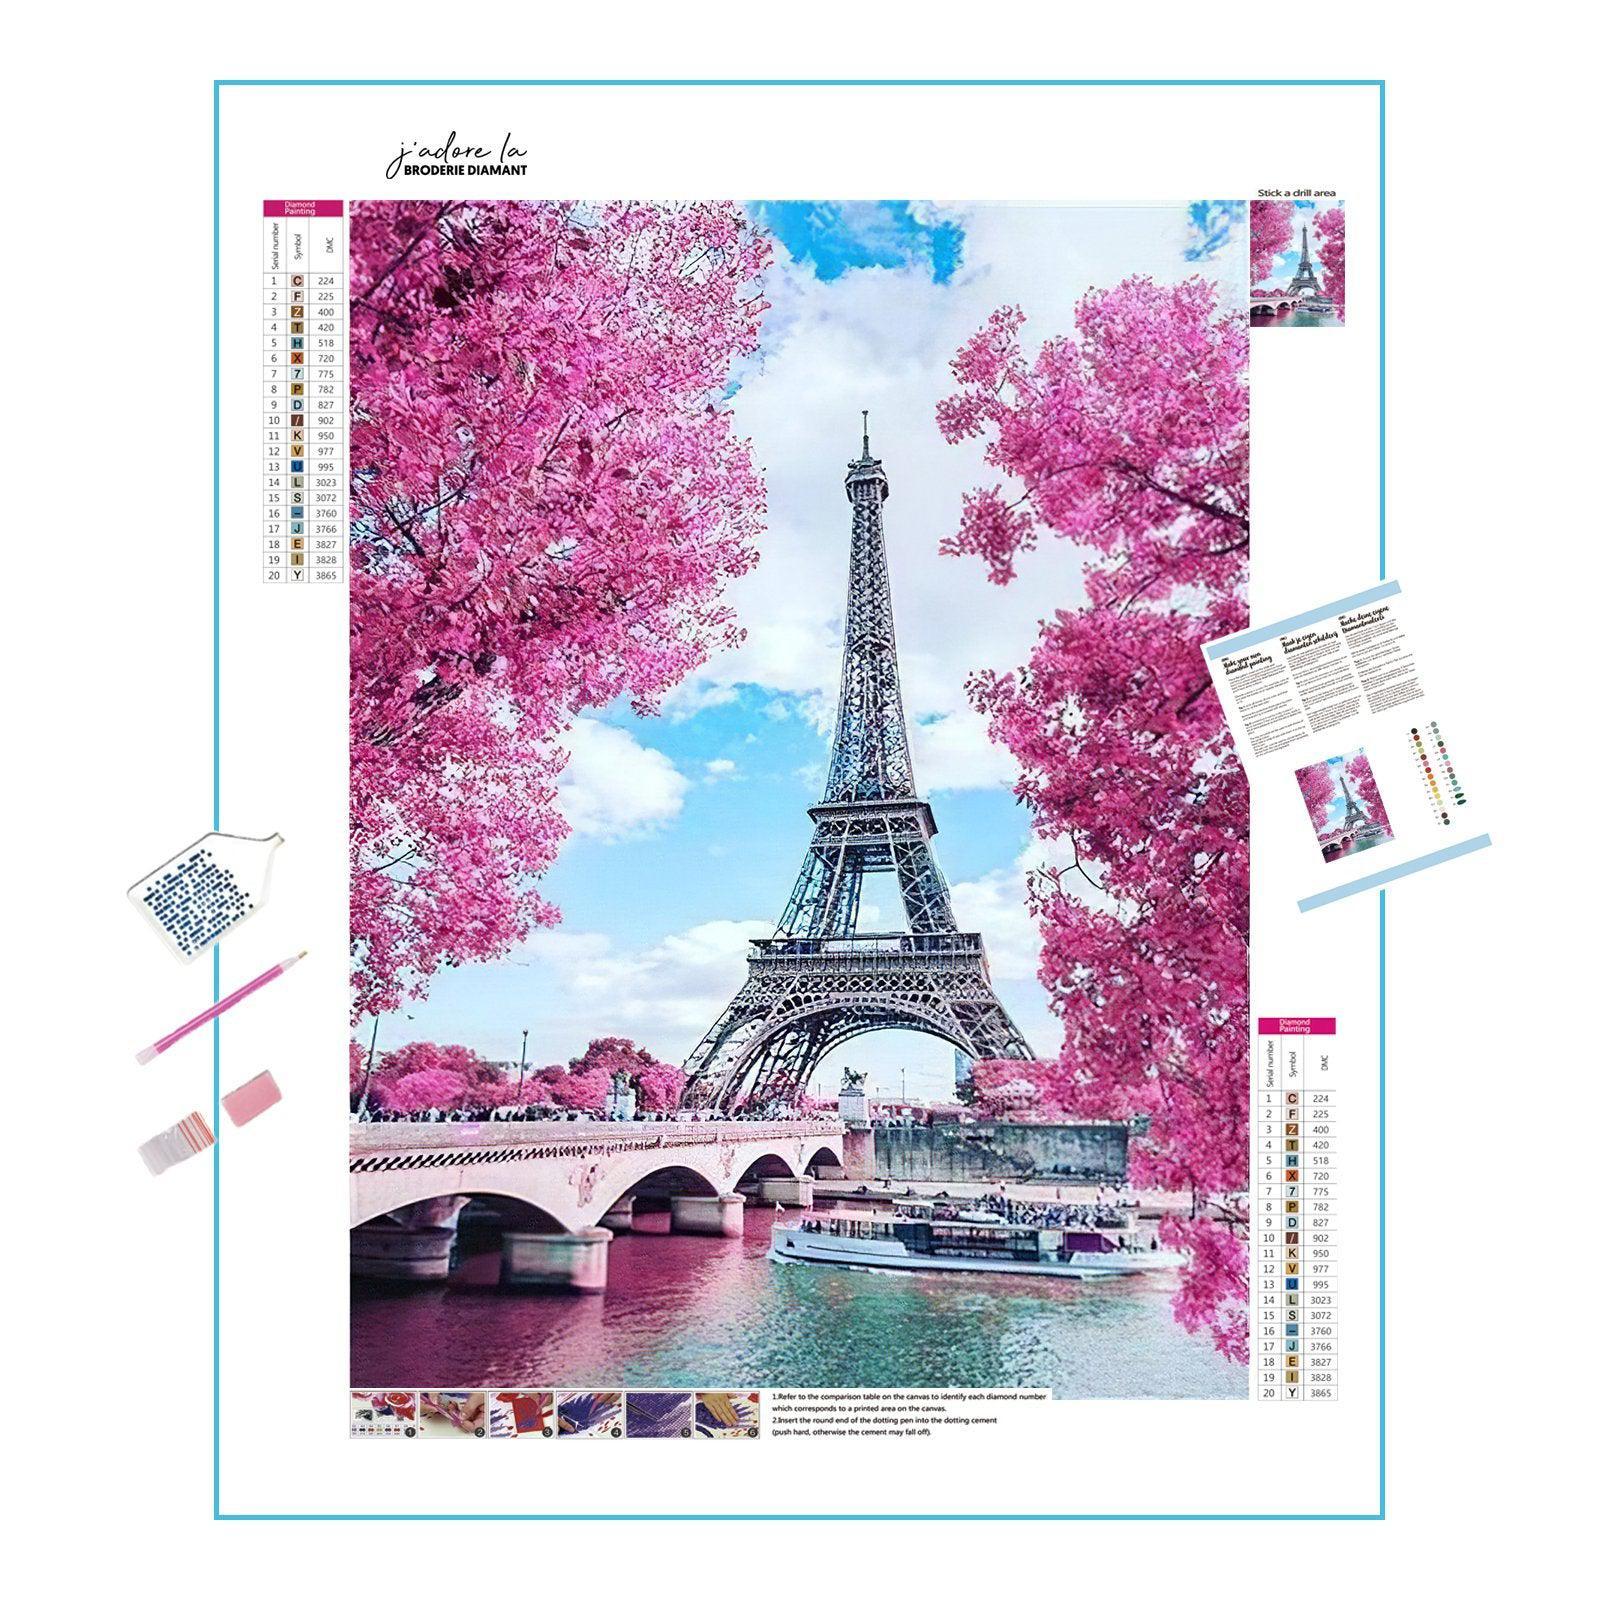 Romance under the Eiffel with roses artwork.Eiffel Tower And Roses - Diamondartlove